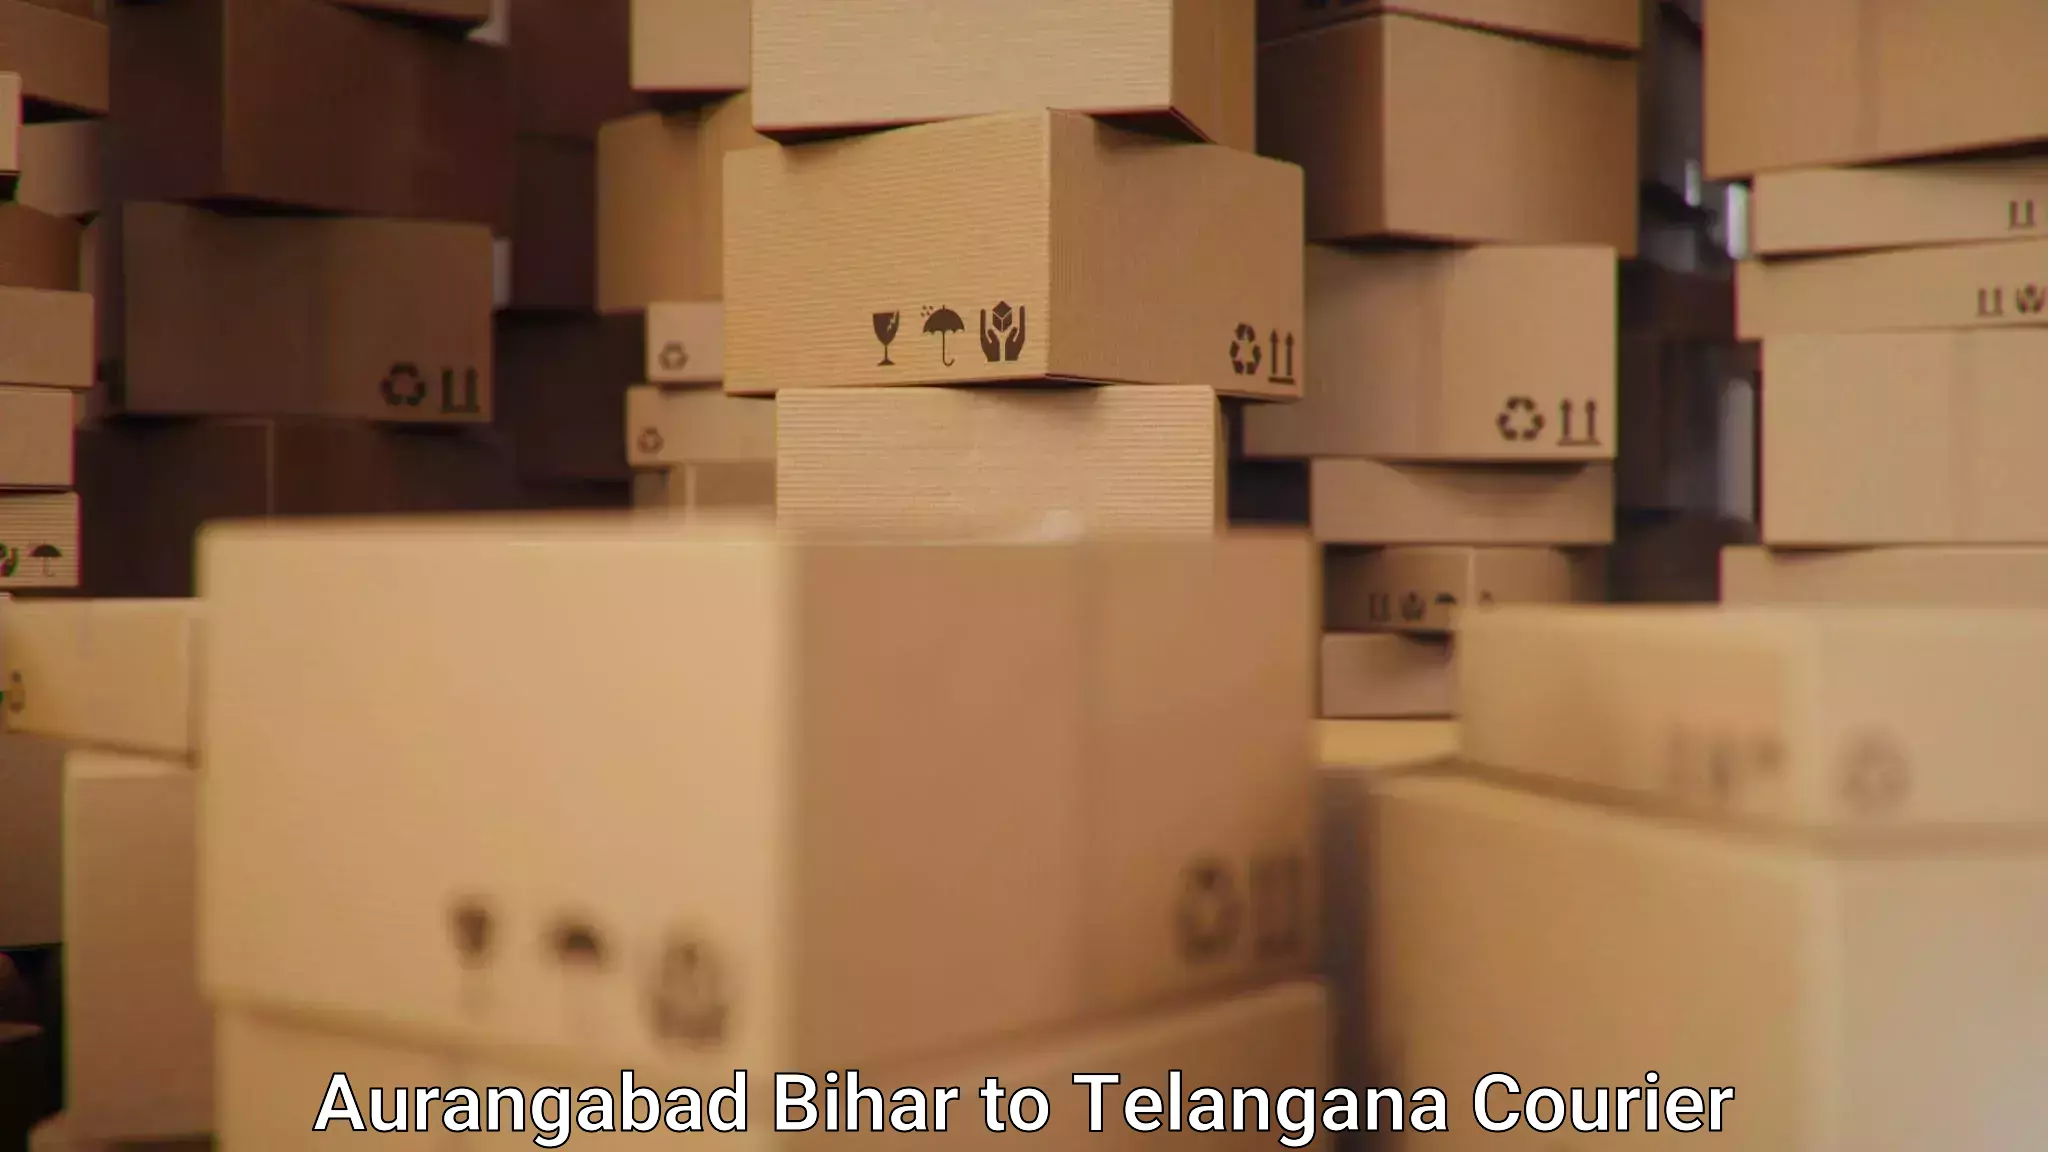 On-demand courier Aurangabad Bihar to Telangana